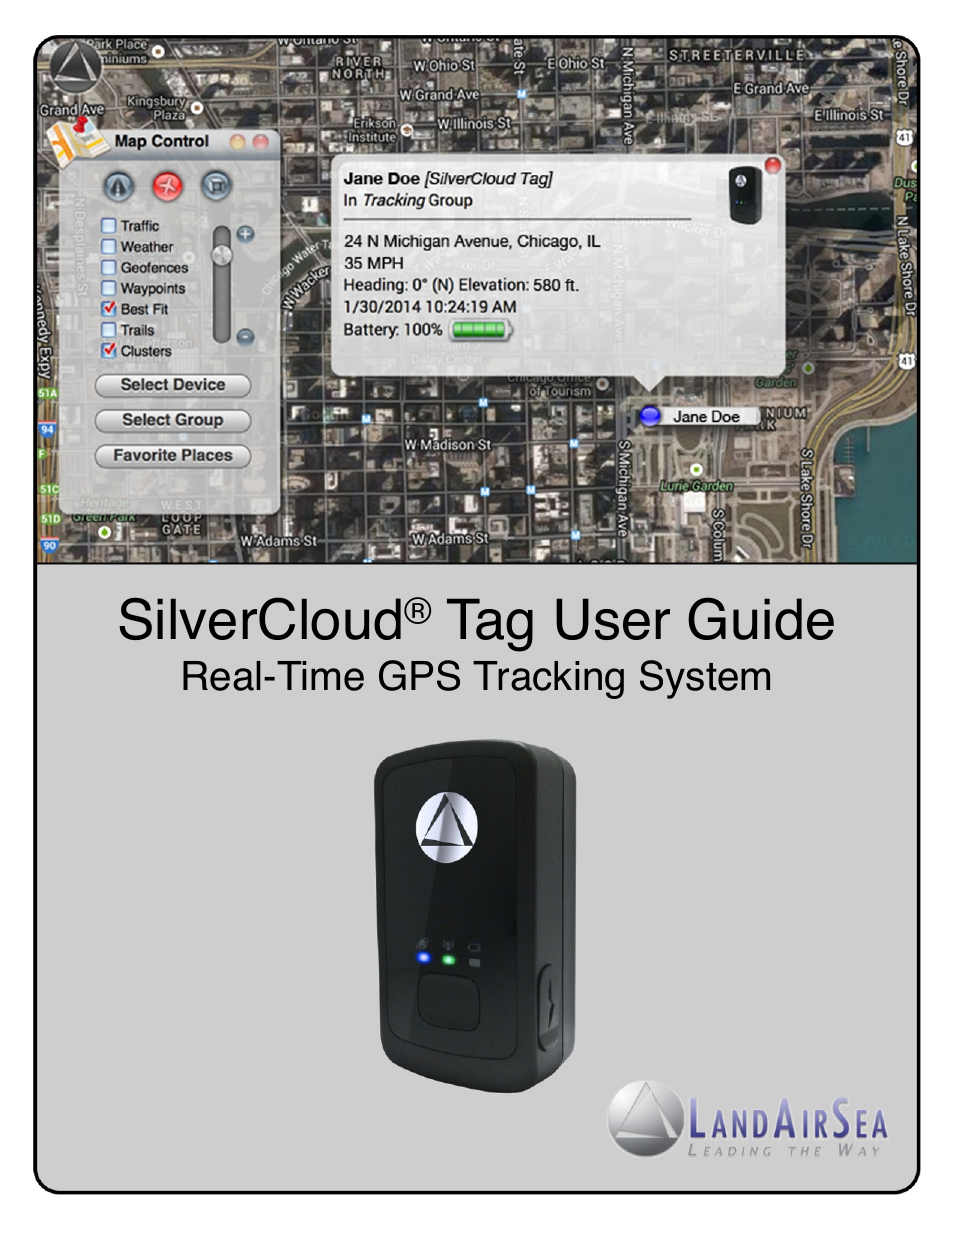 SilverCloud Tag Live GPS Tracker